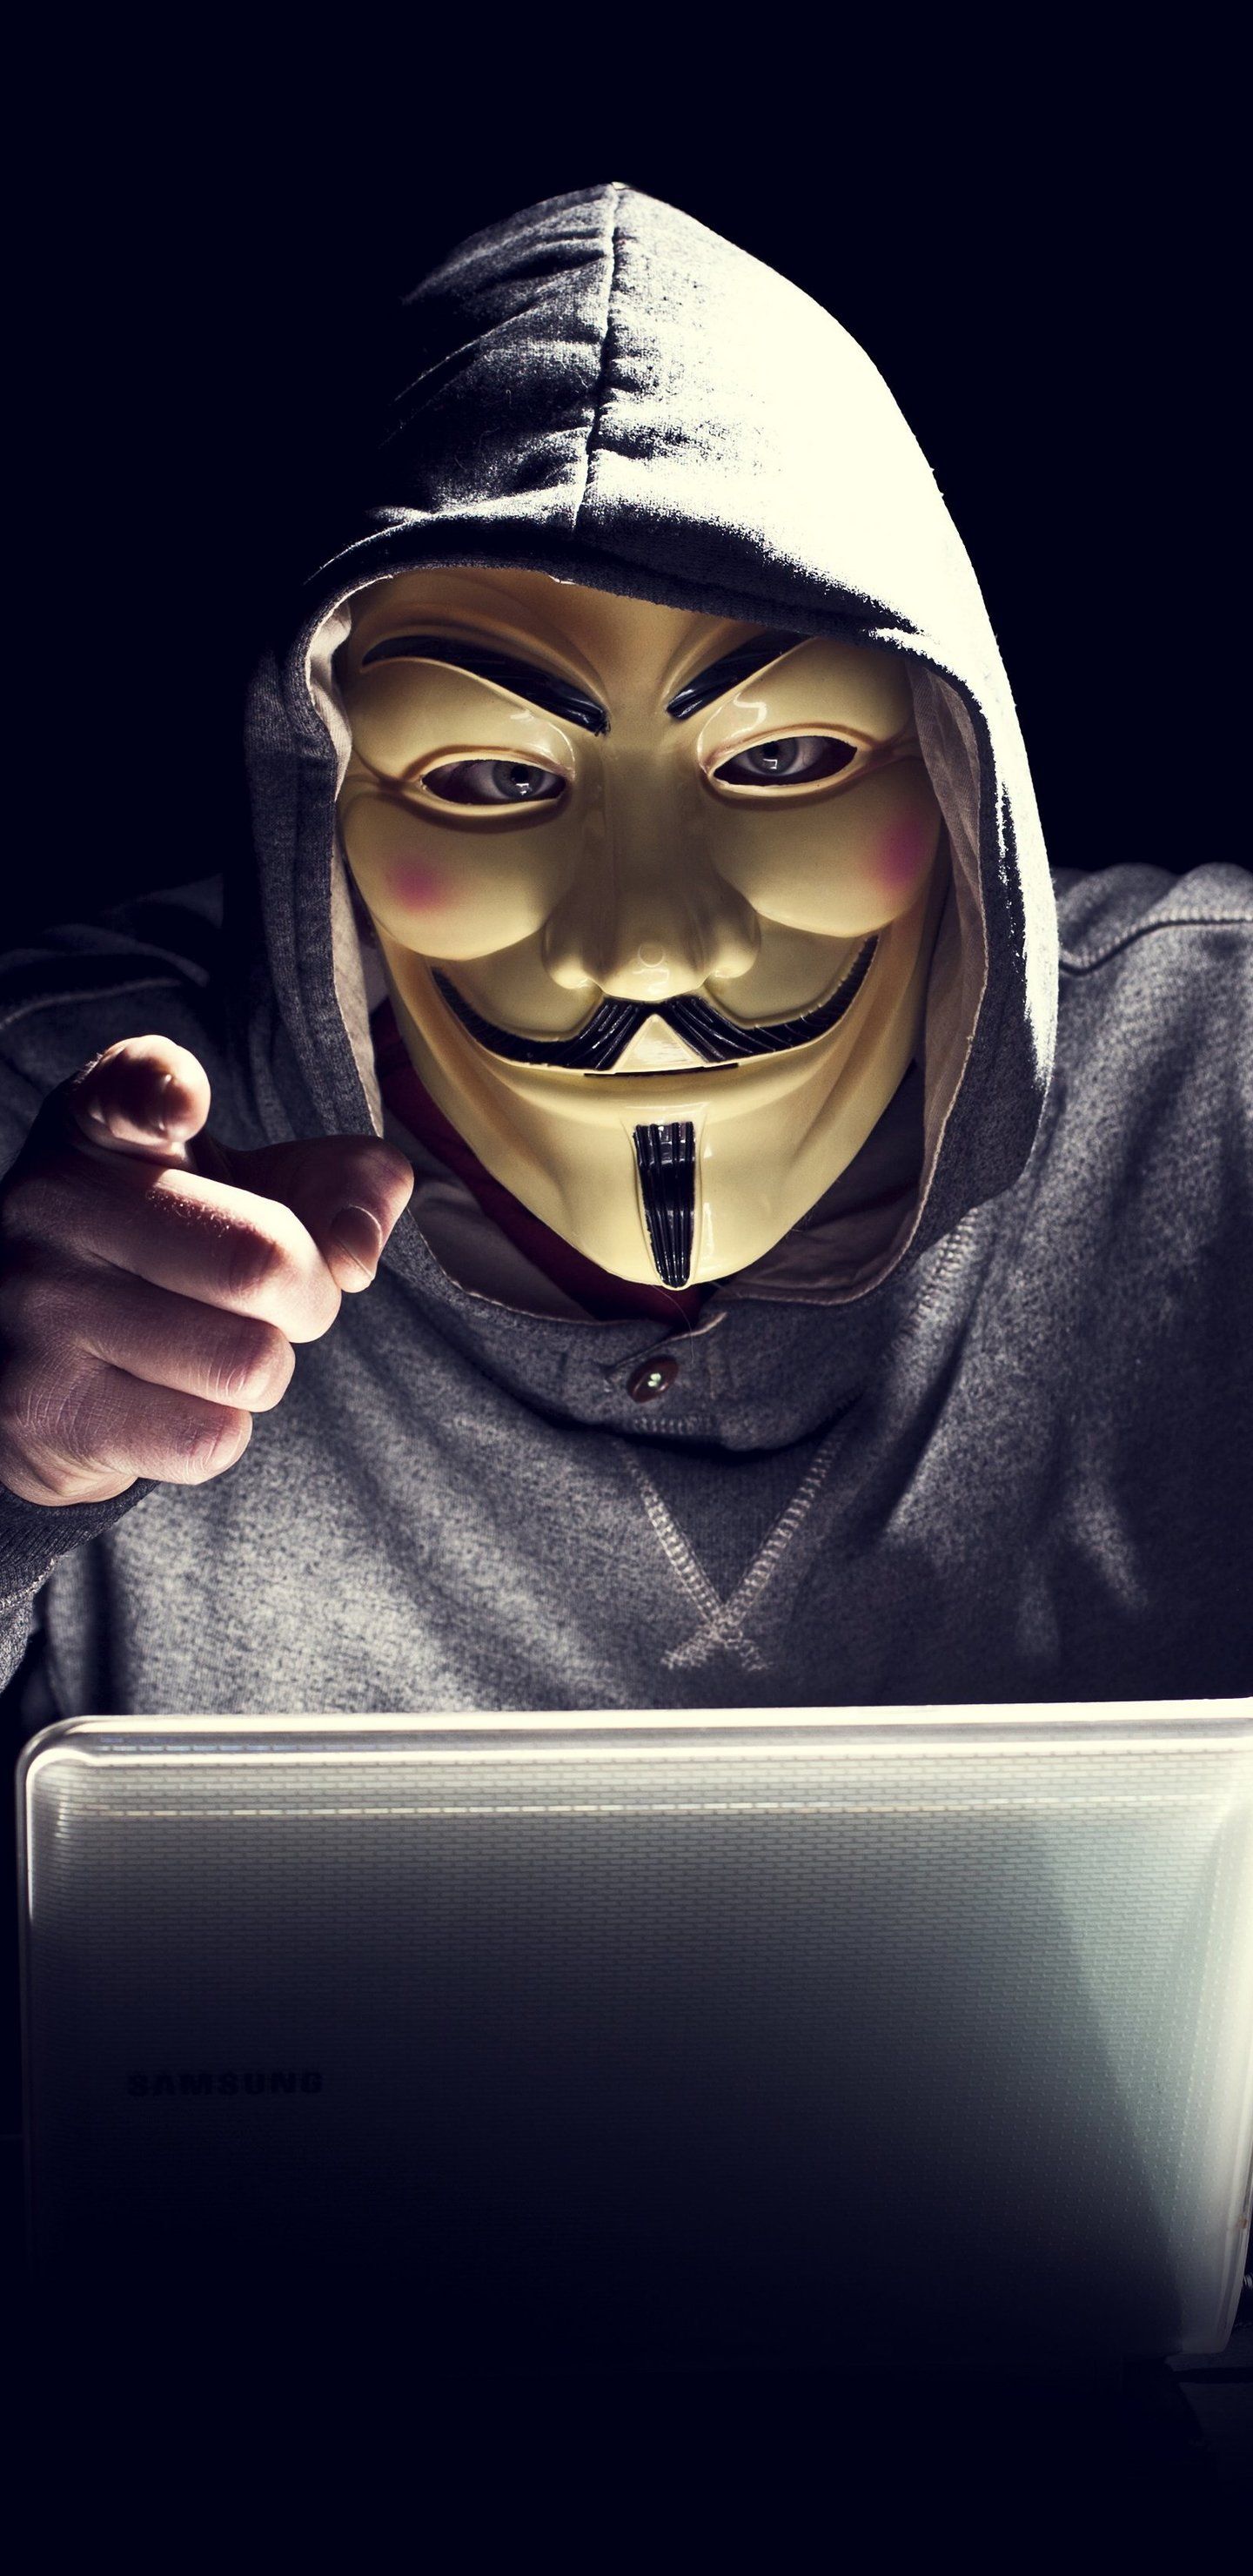 Anonymus Hacker In Mask wallpaper